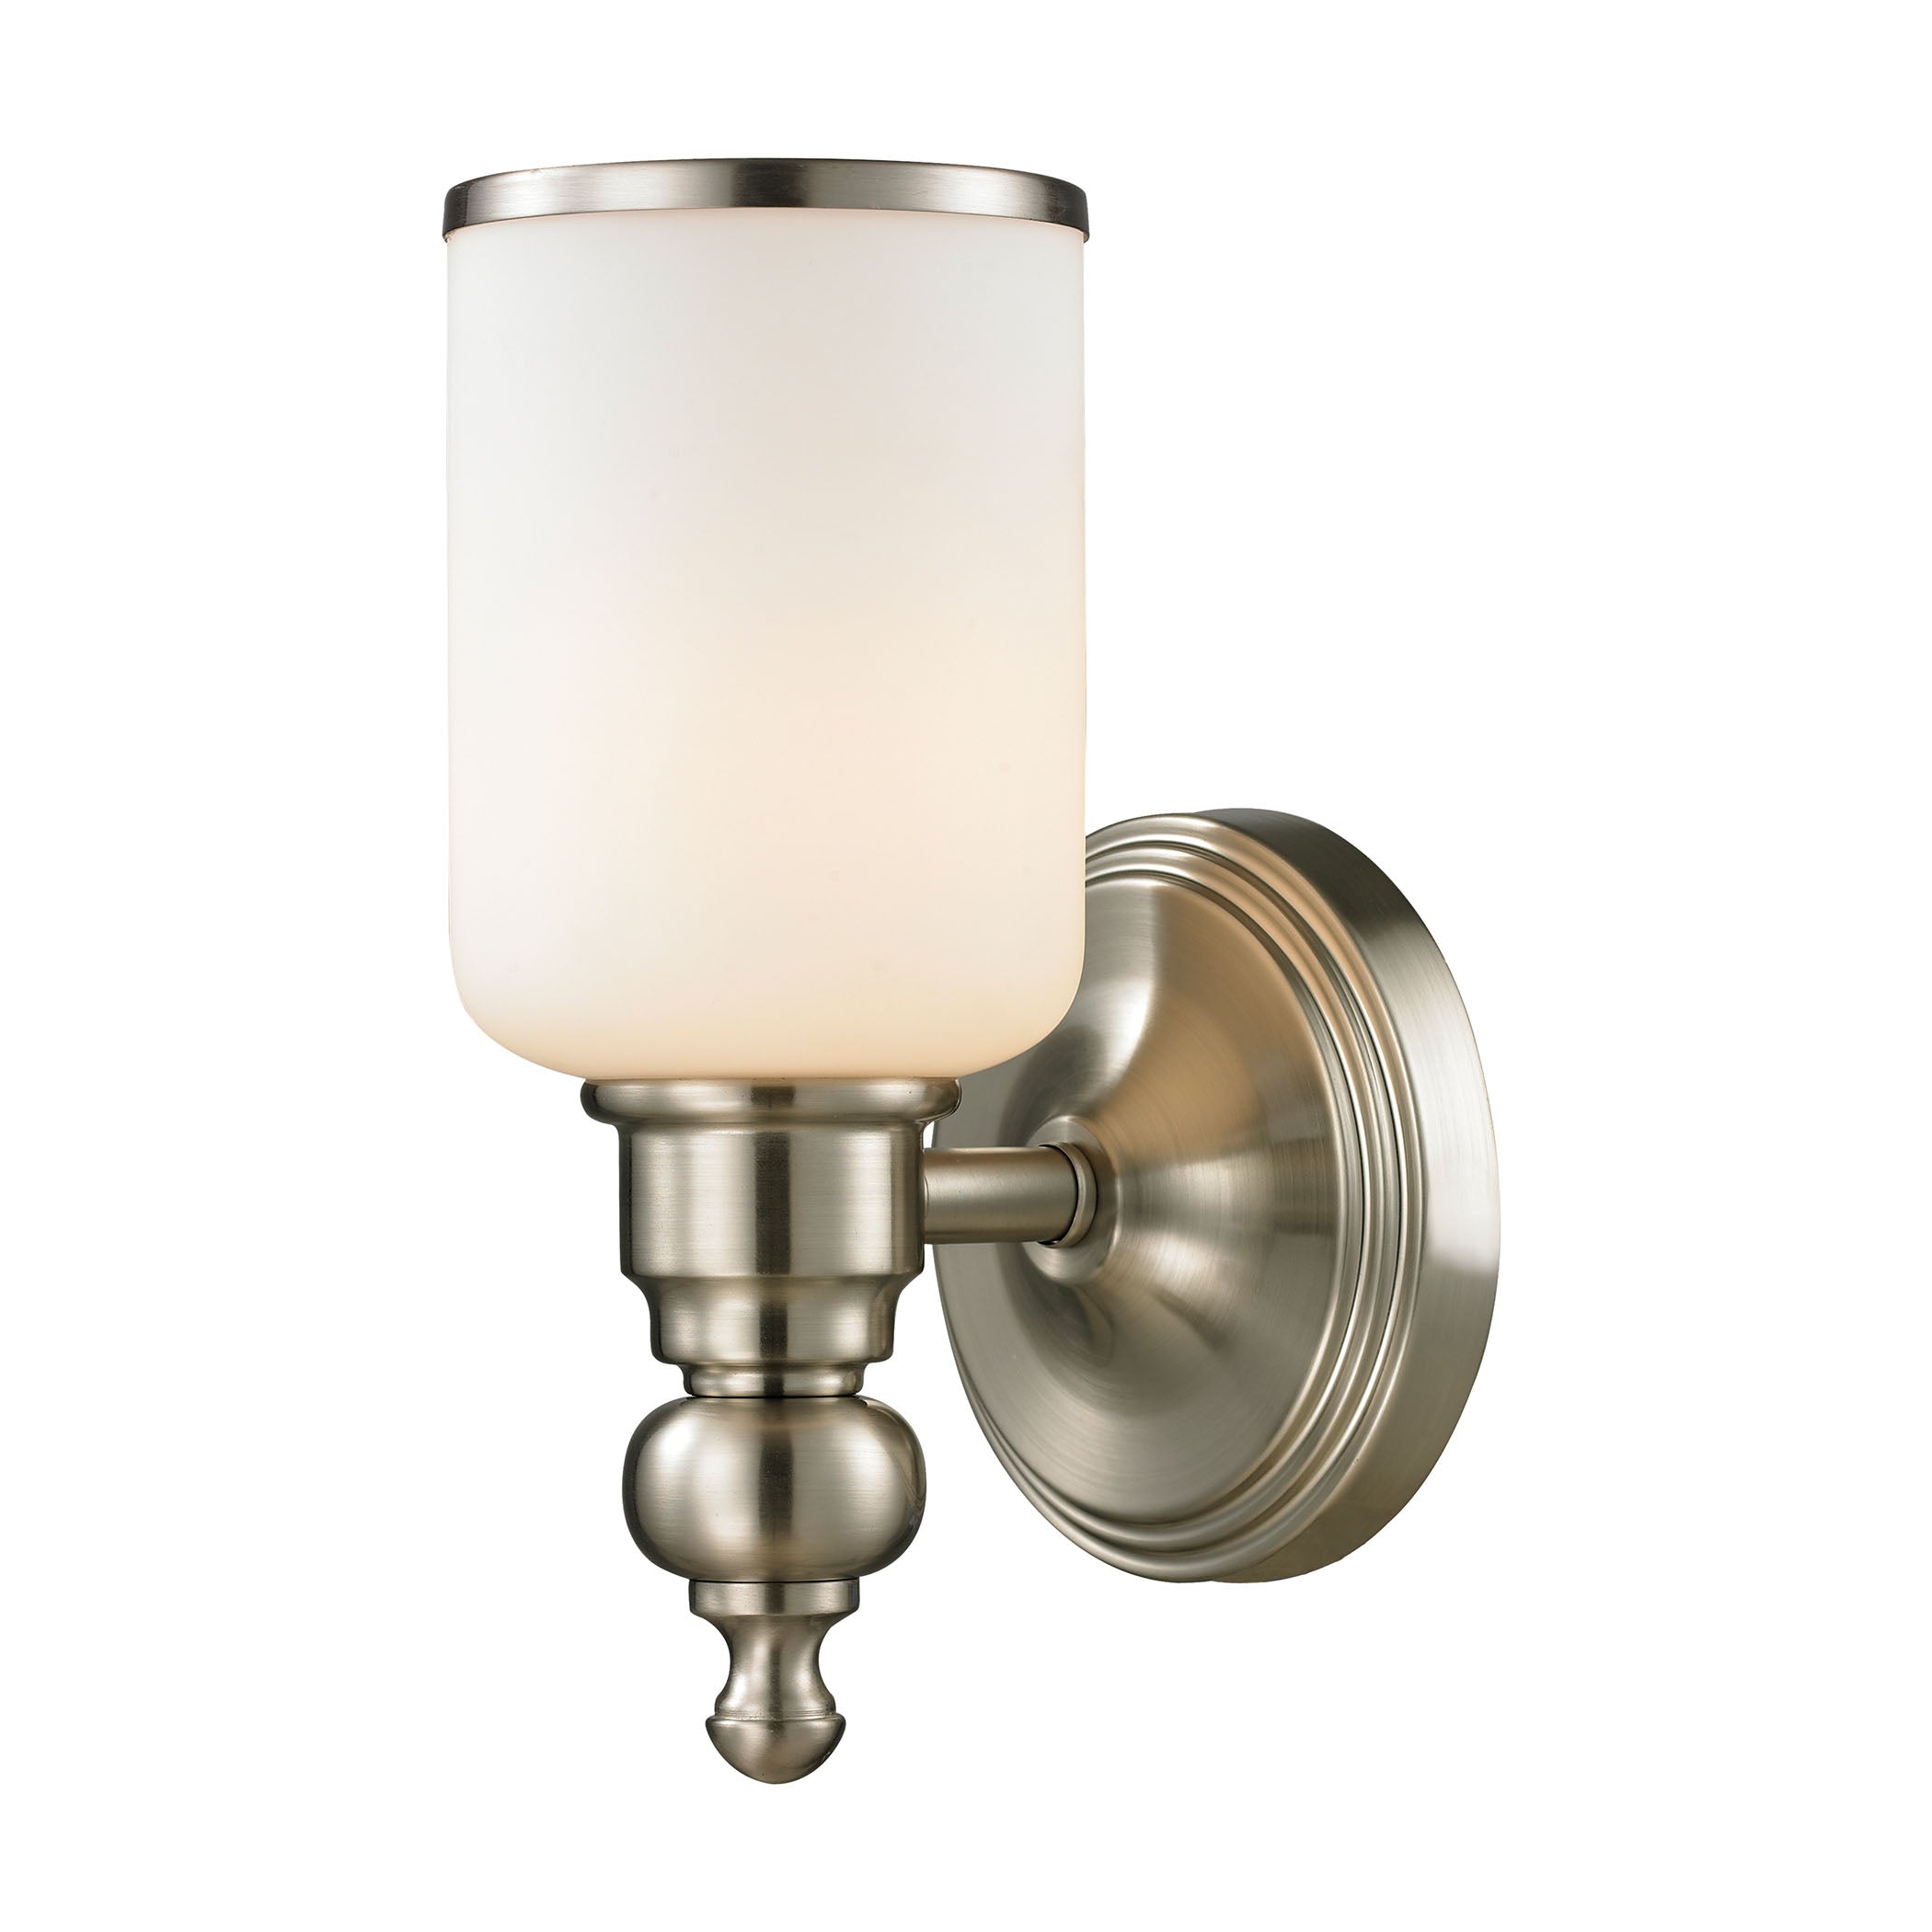 ELK Lighting 11580/1 Bristol Way 1-Light Vanity Lamp in Brushed Nickel with Opal White Blown Glass